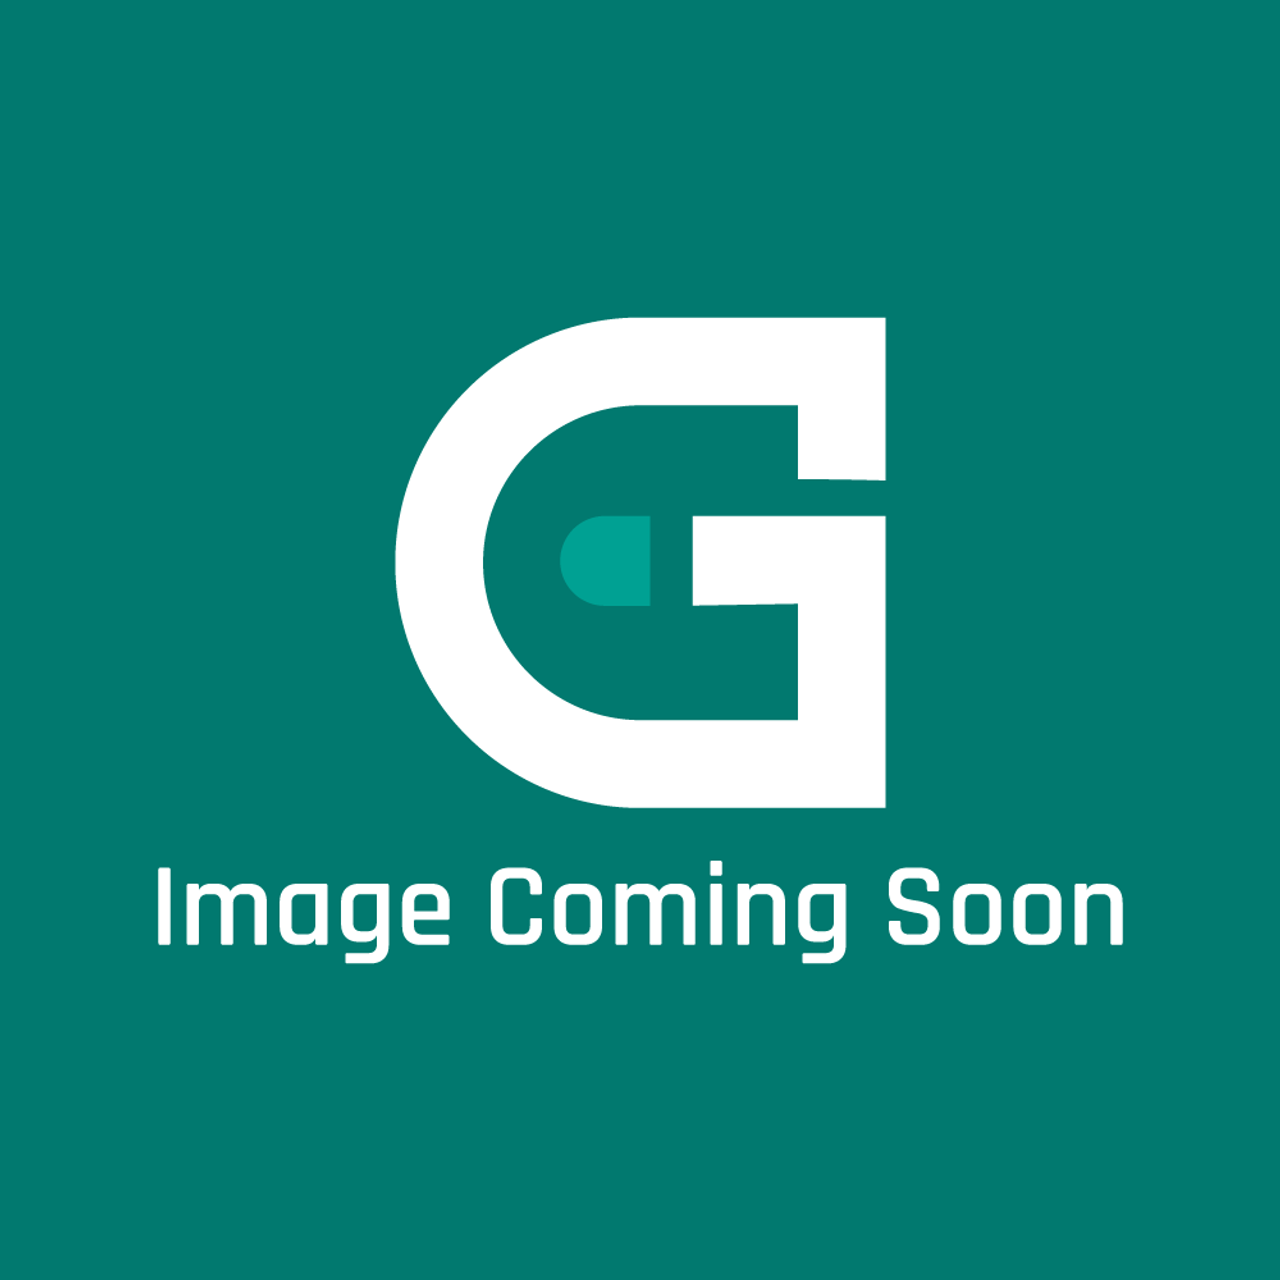 AGA Marvel EACS47380 - Aga Toaster - Image Coming Soon!